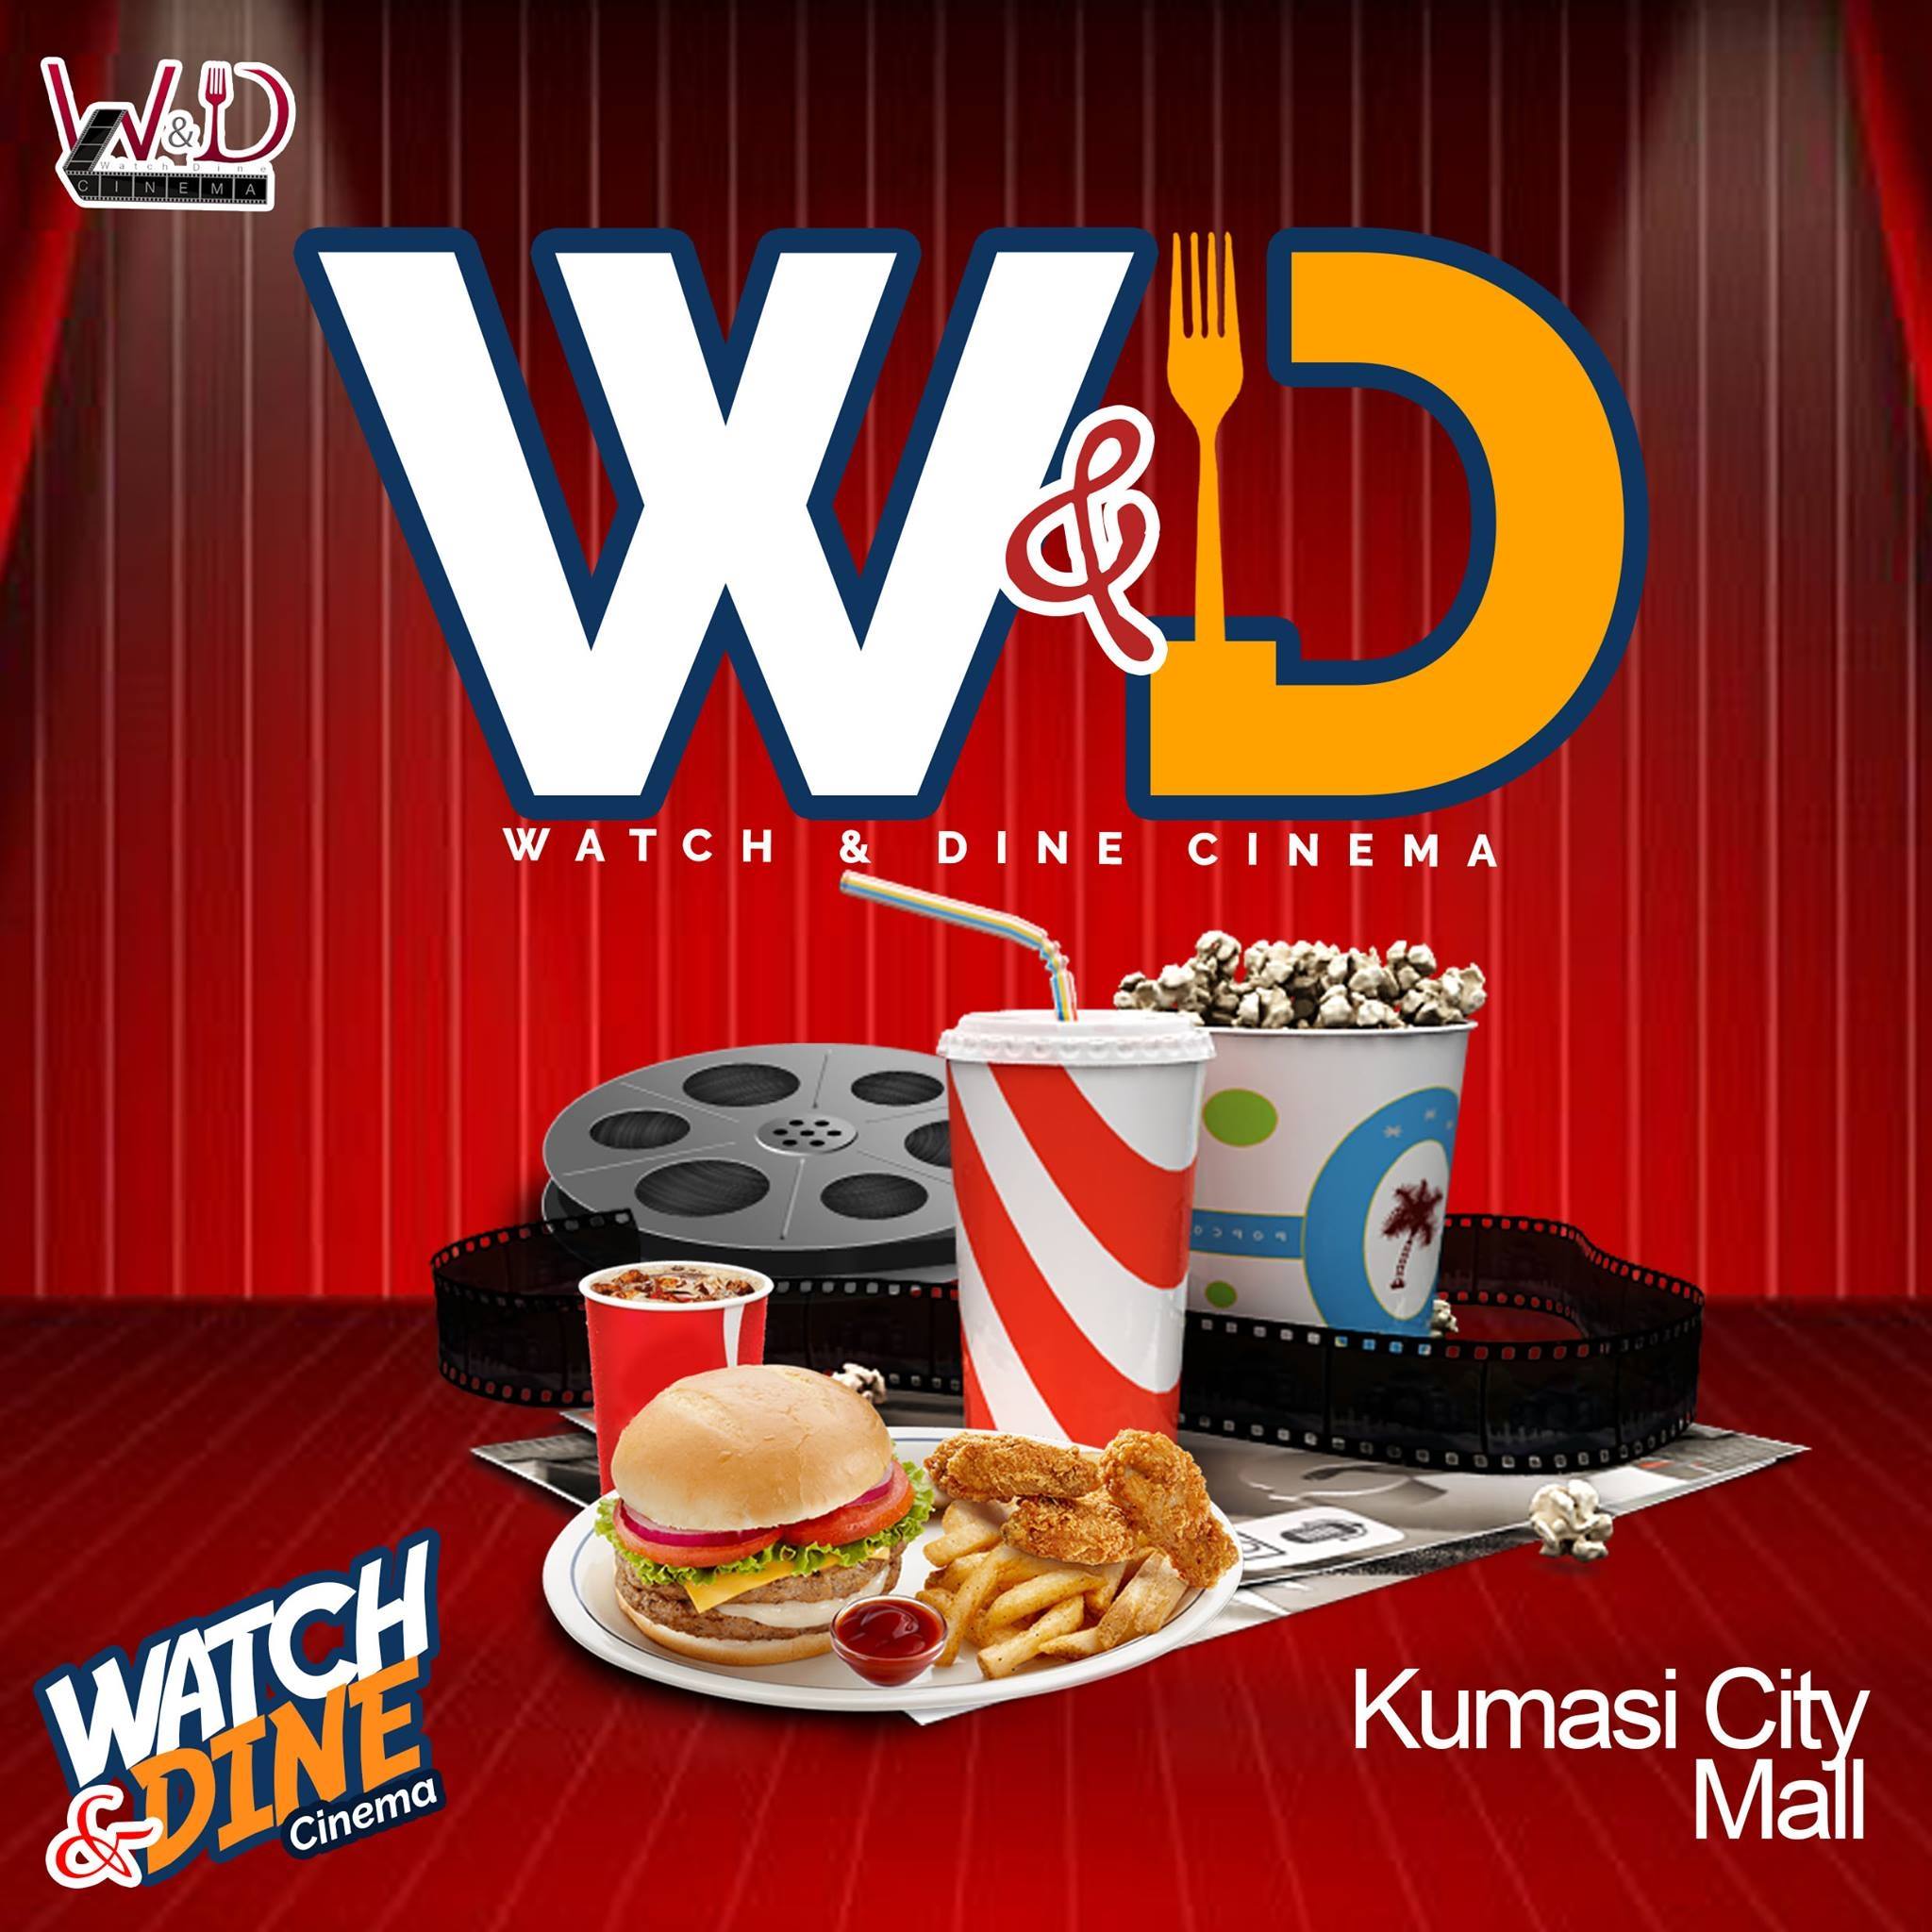 Watch & Dine Cinema, Ghana’s Premium Cinema To Open Soon At The Kumasi City Mall